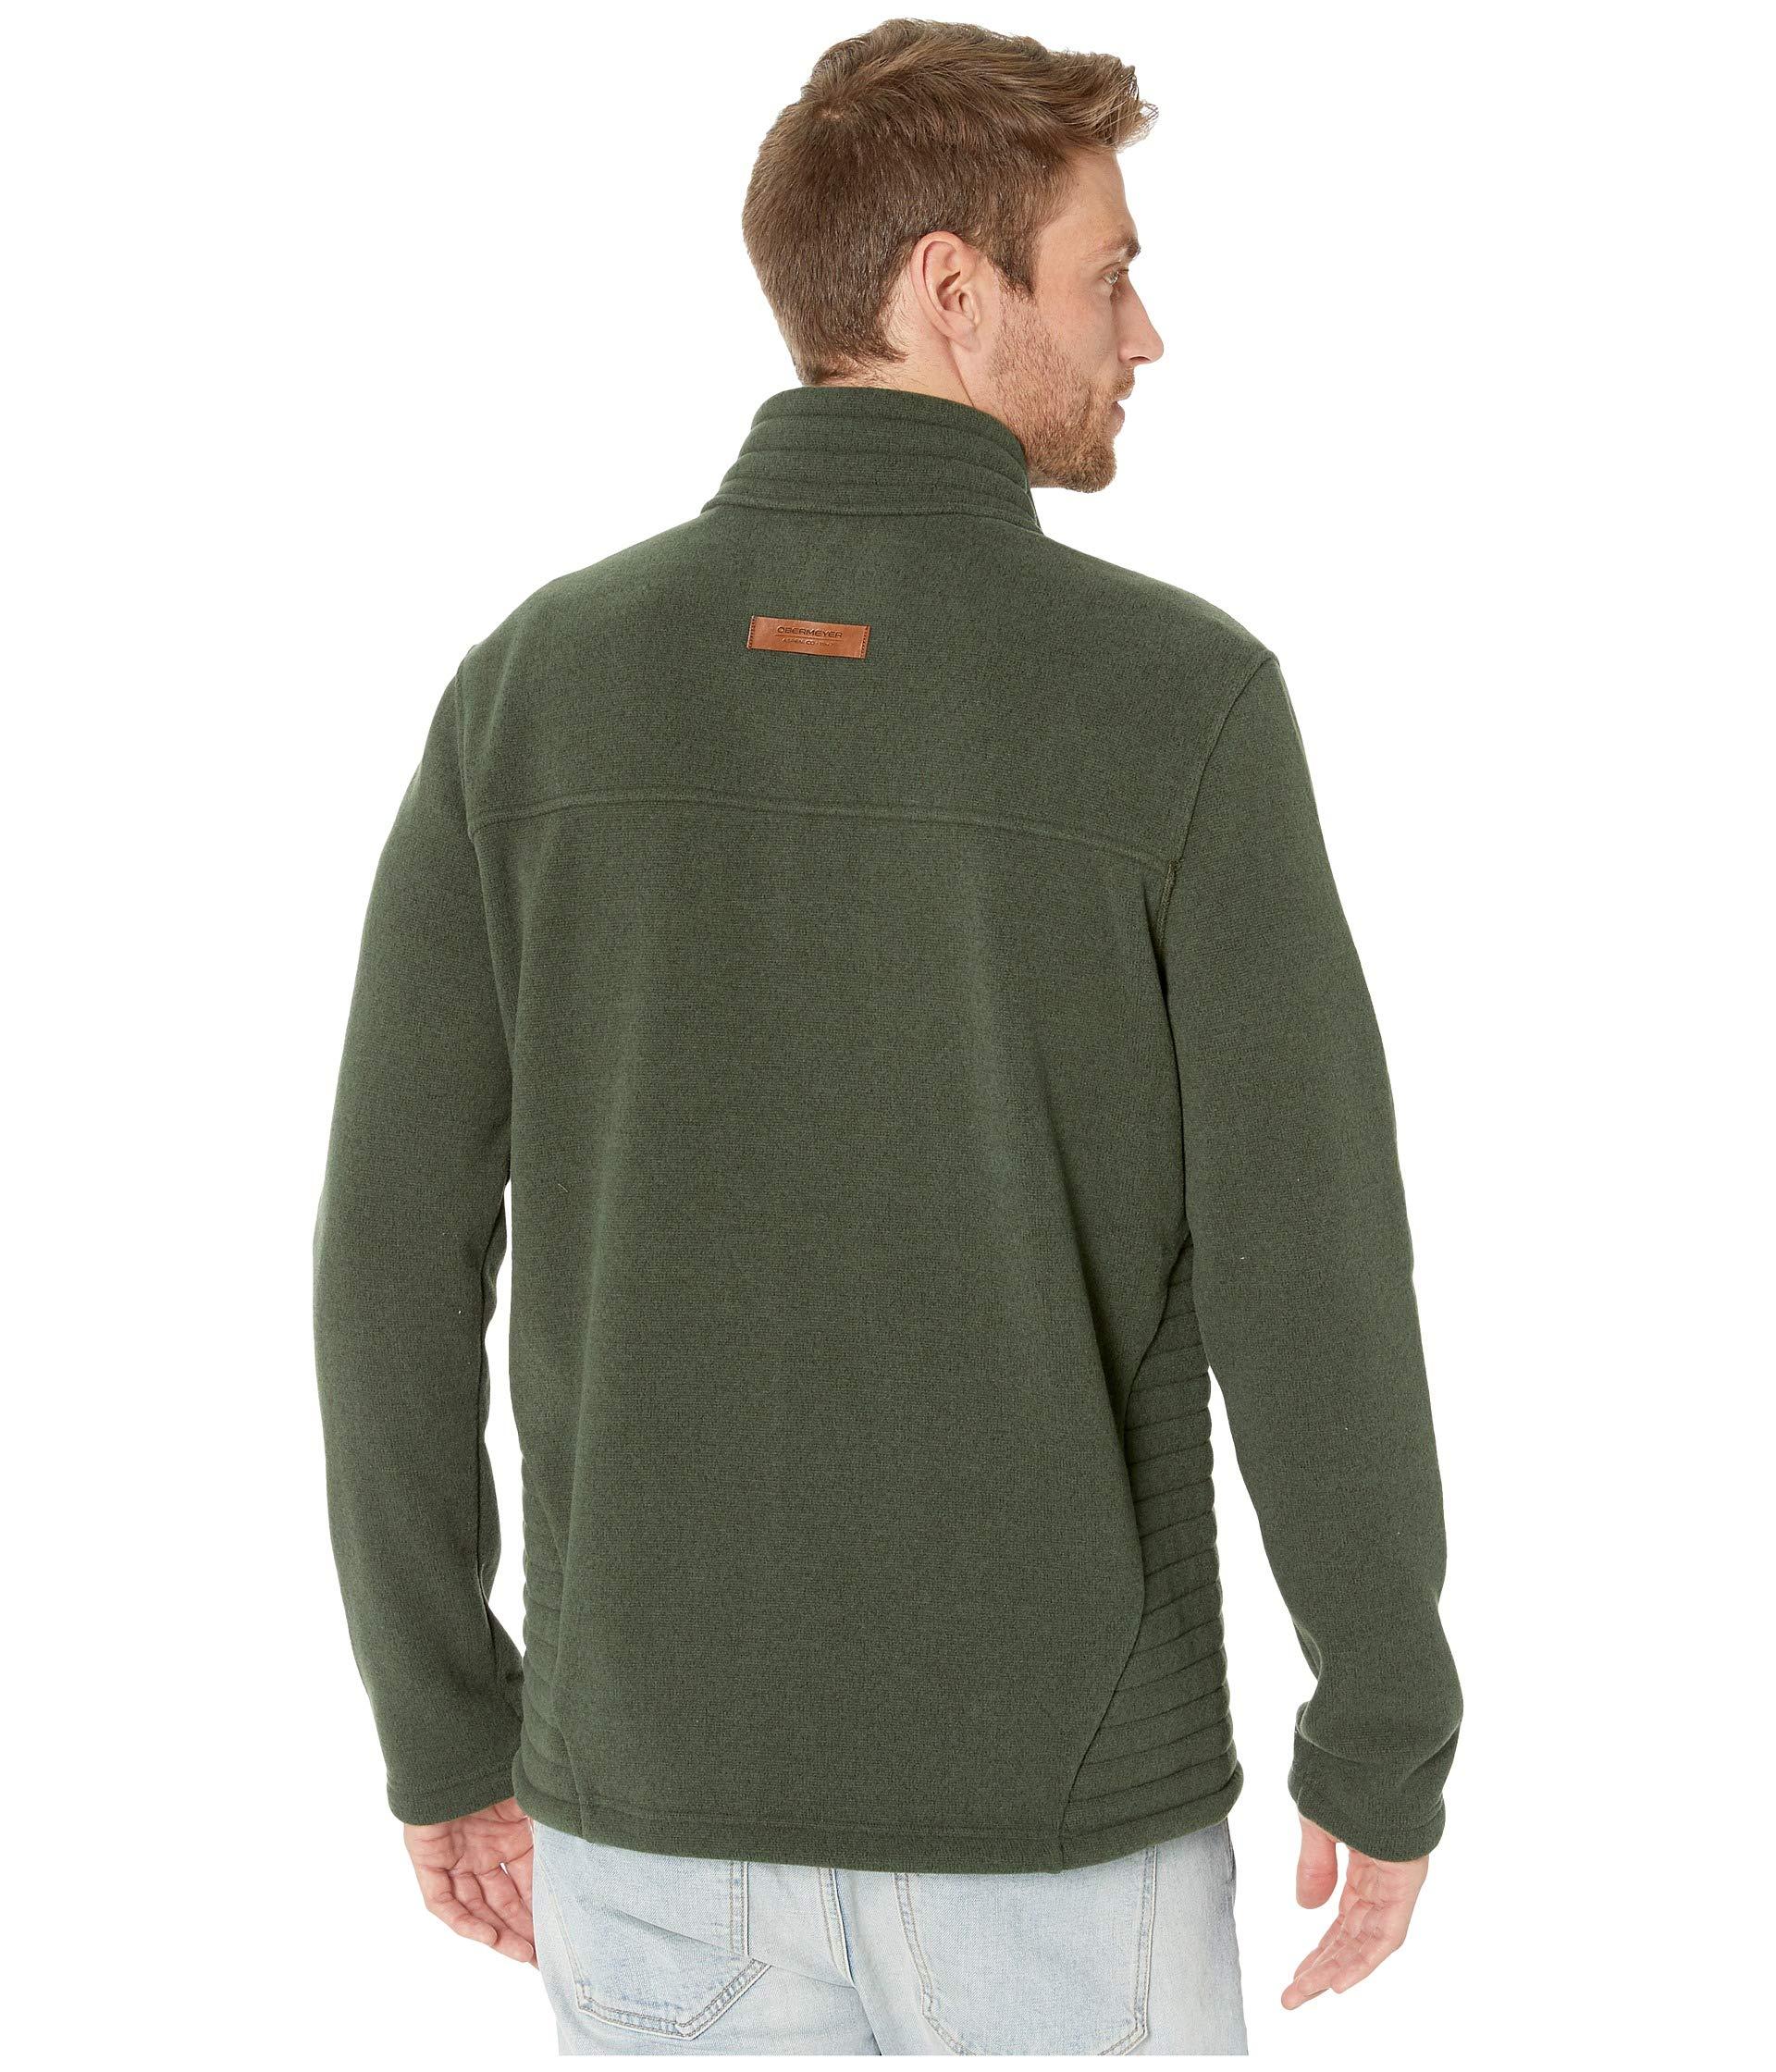 Obermeyer Joshua Fleece Jacket in Olive (Green) for Men - Lyst